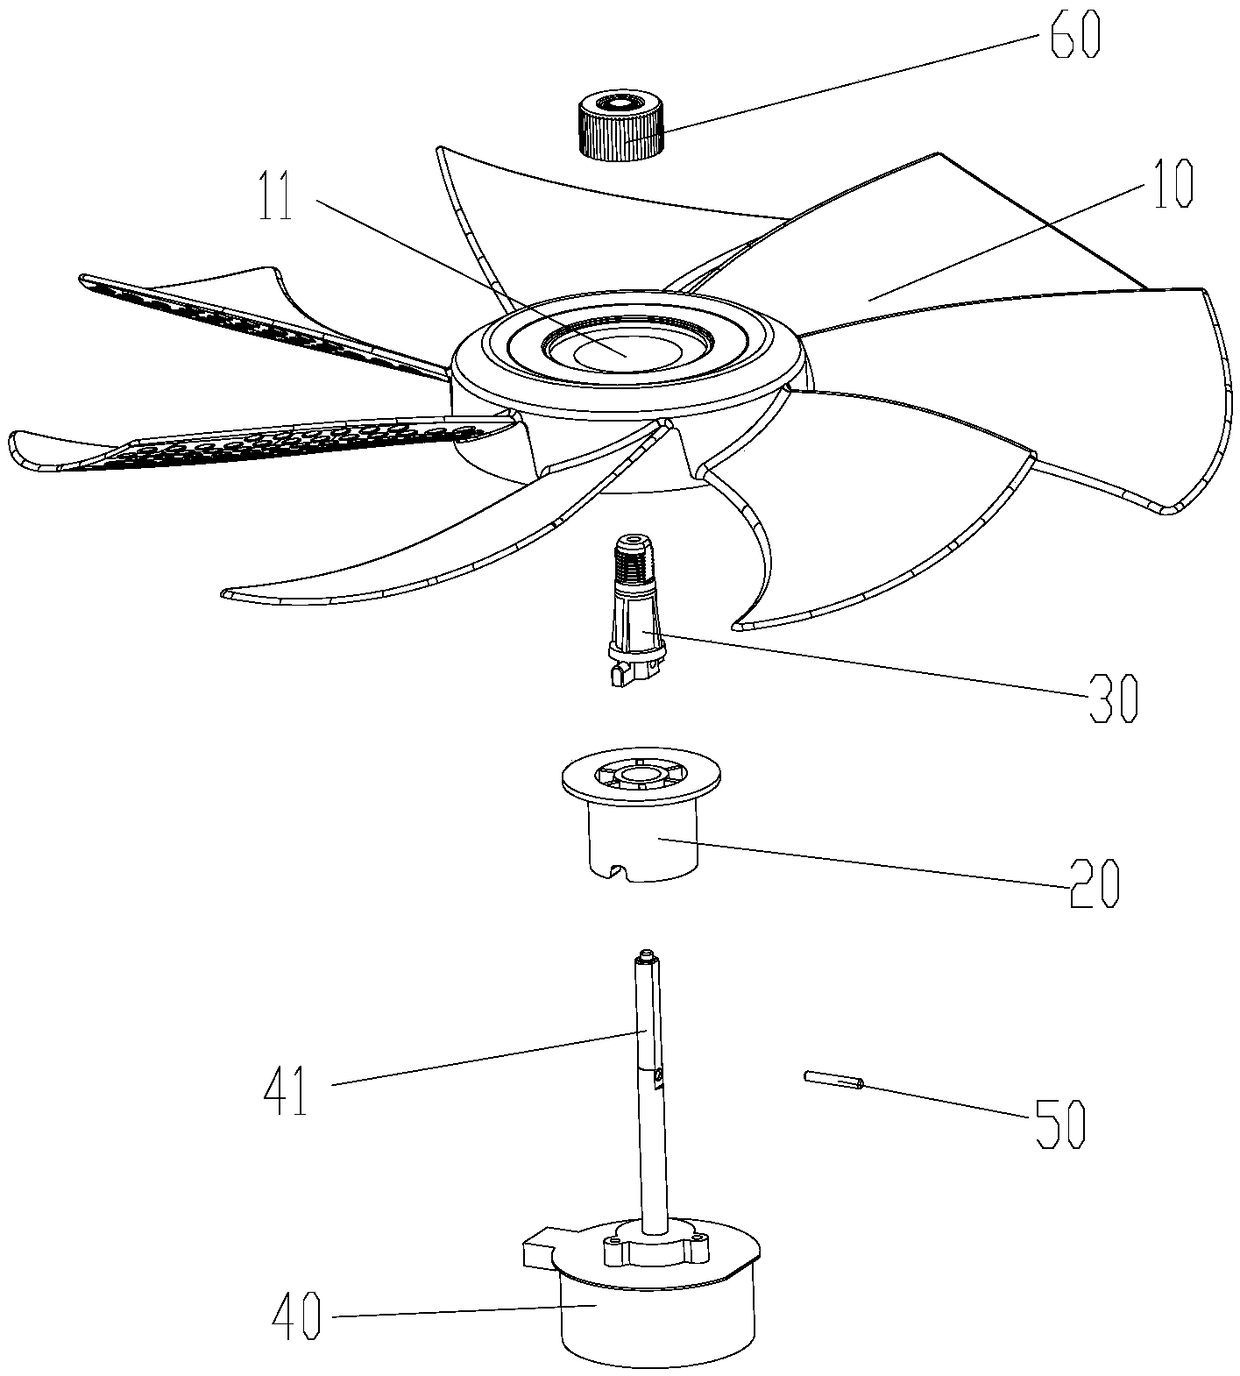 Electric fan head assembly and electric fan